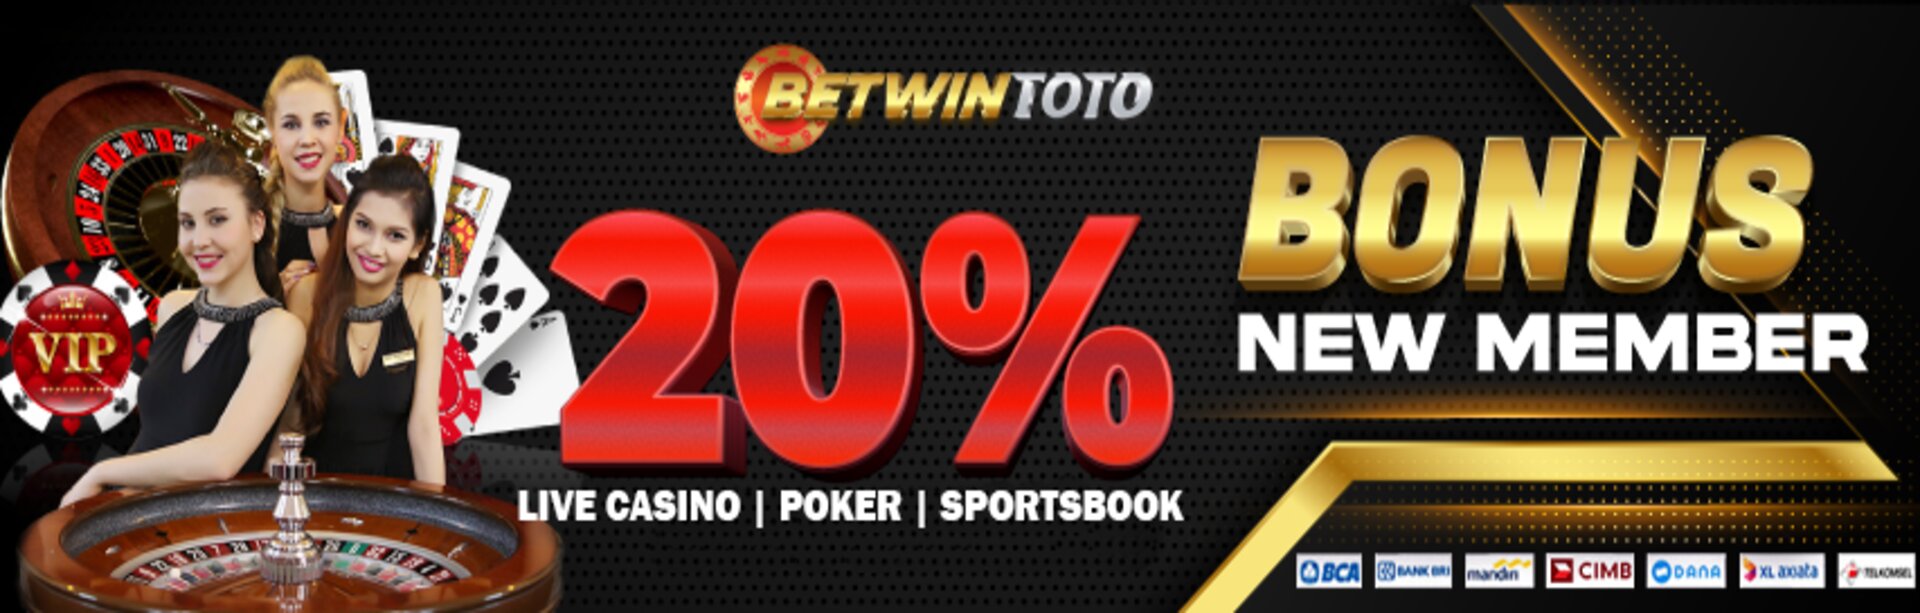 WELCOME BONUS NEW MEMBER 20% (Live Casino, Sportbook, Poker)